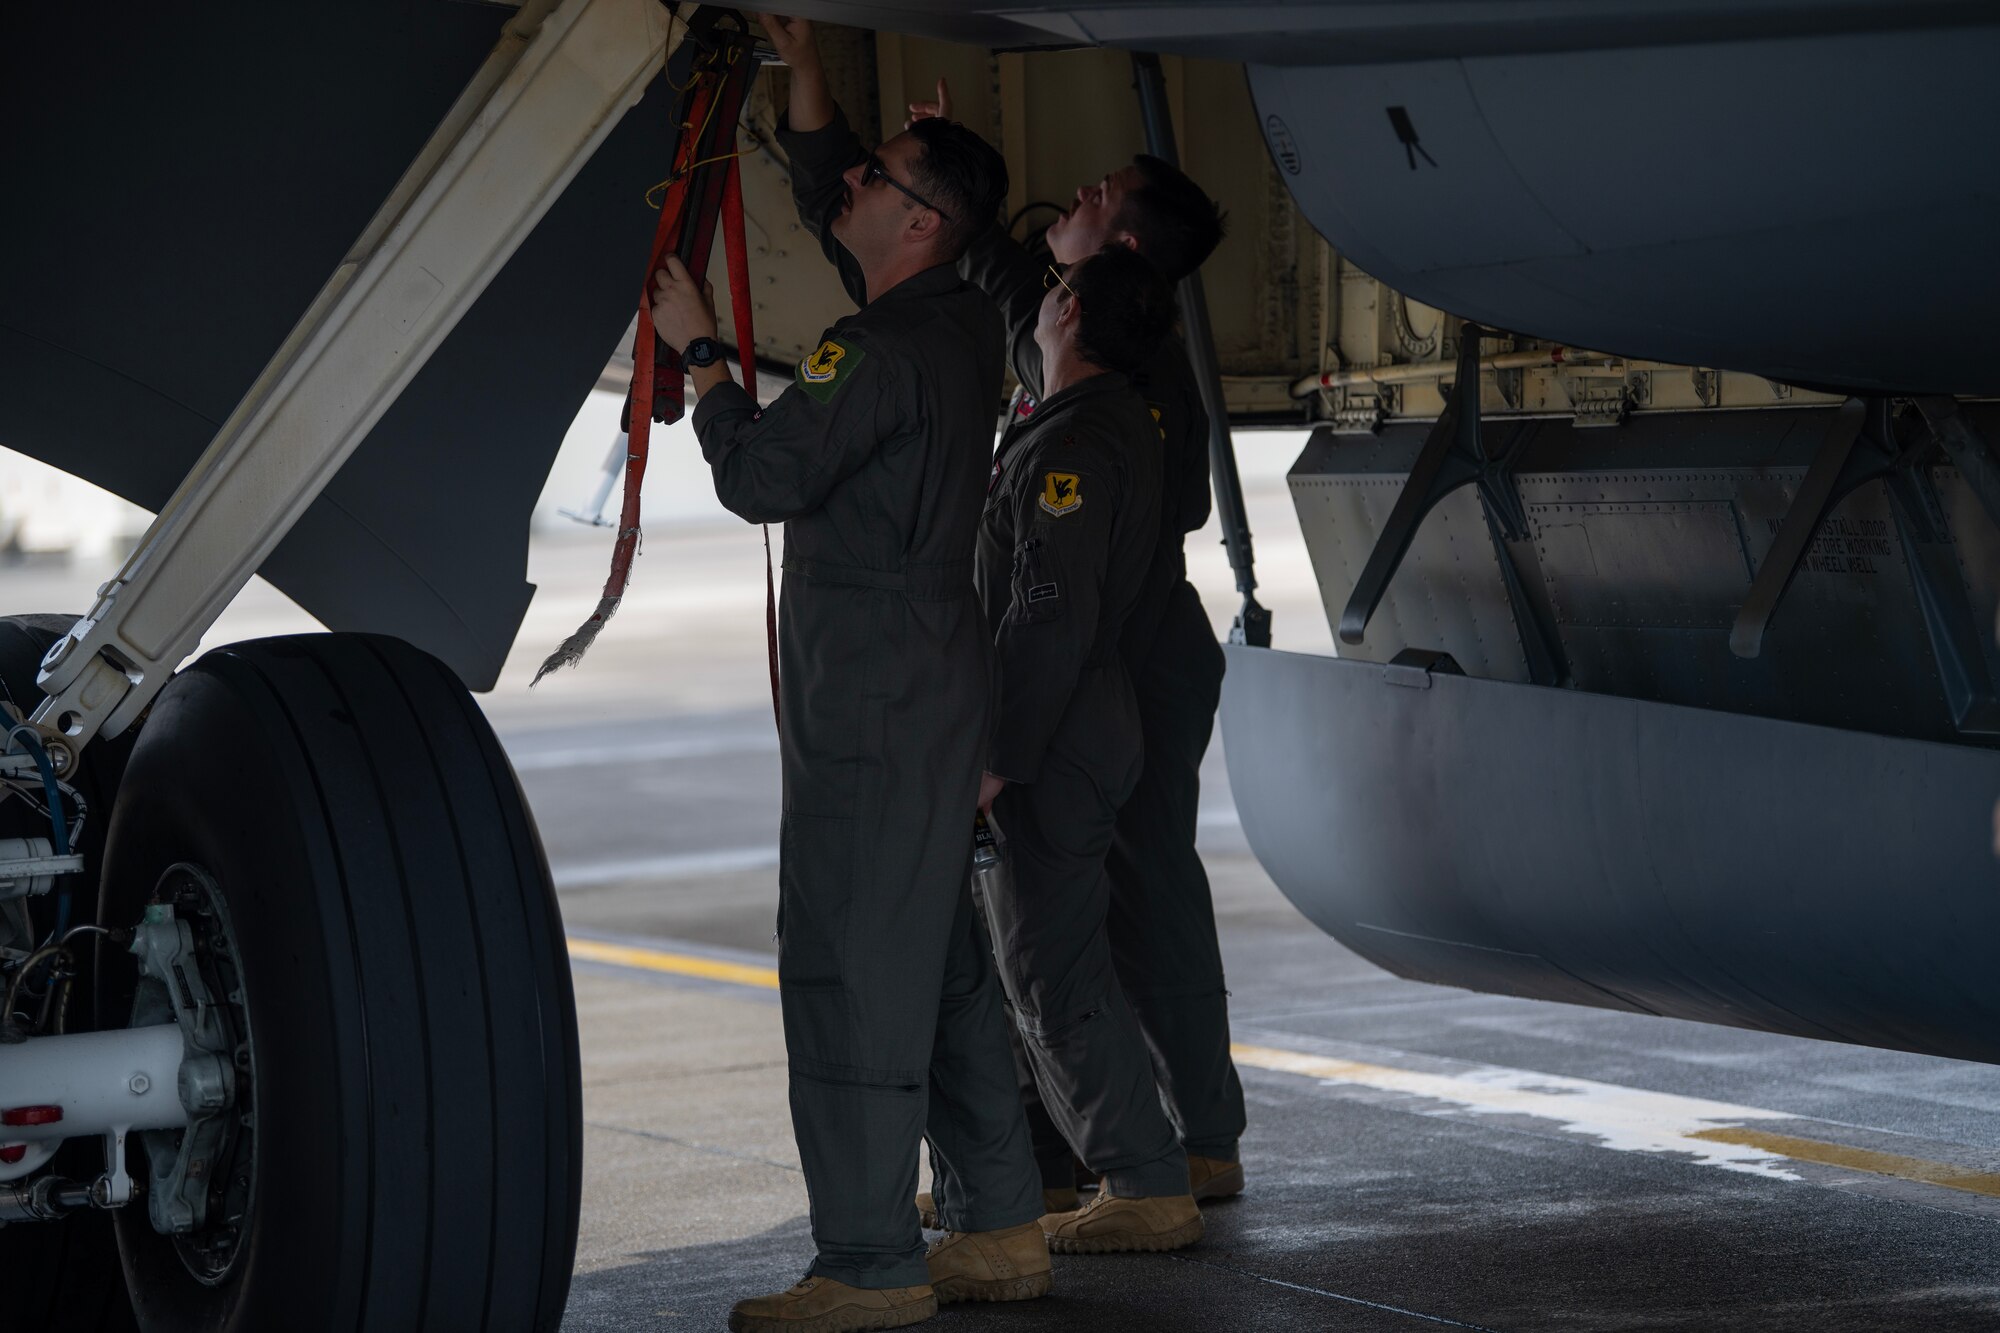 909th ARS Members conducting pre-flight checks